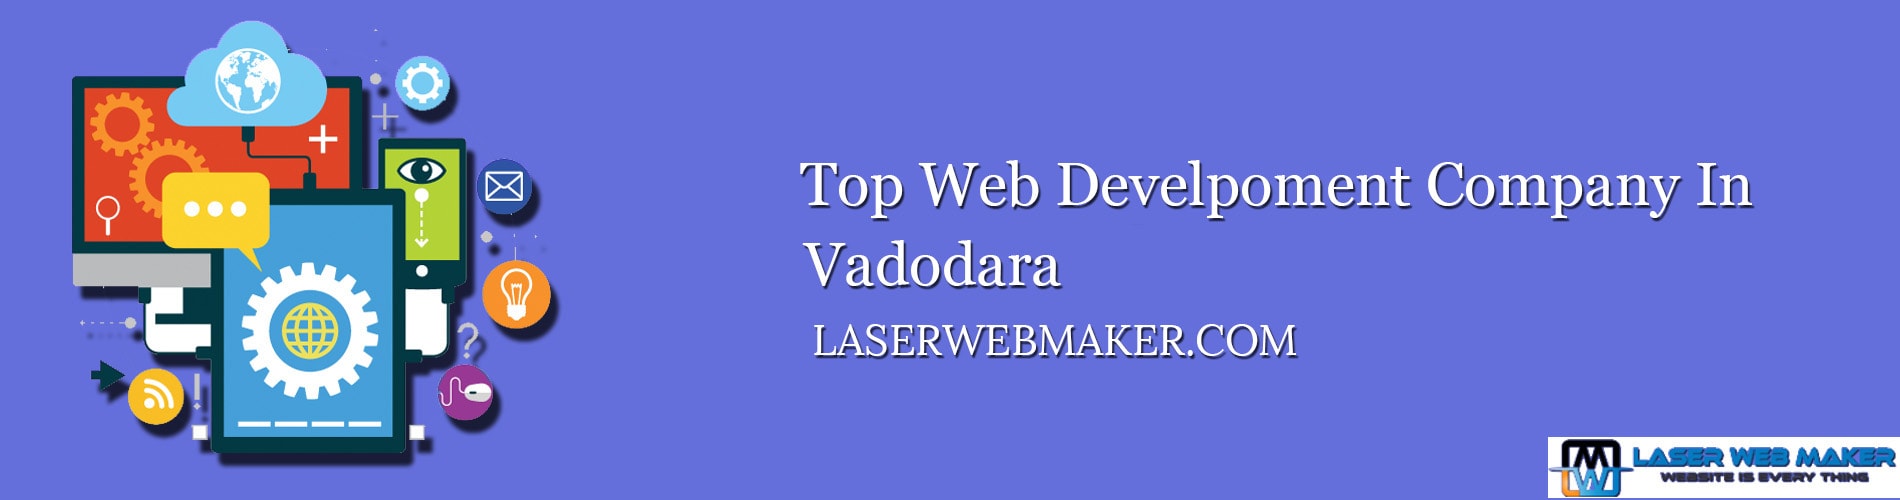 Top Web Development Company In Vadodara Gujarat